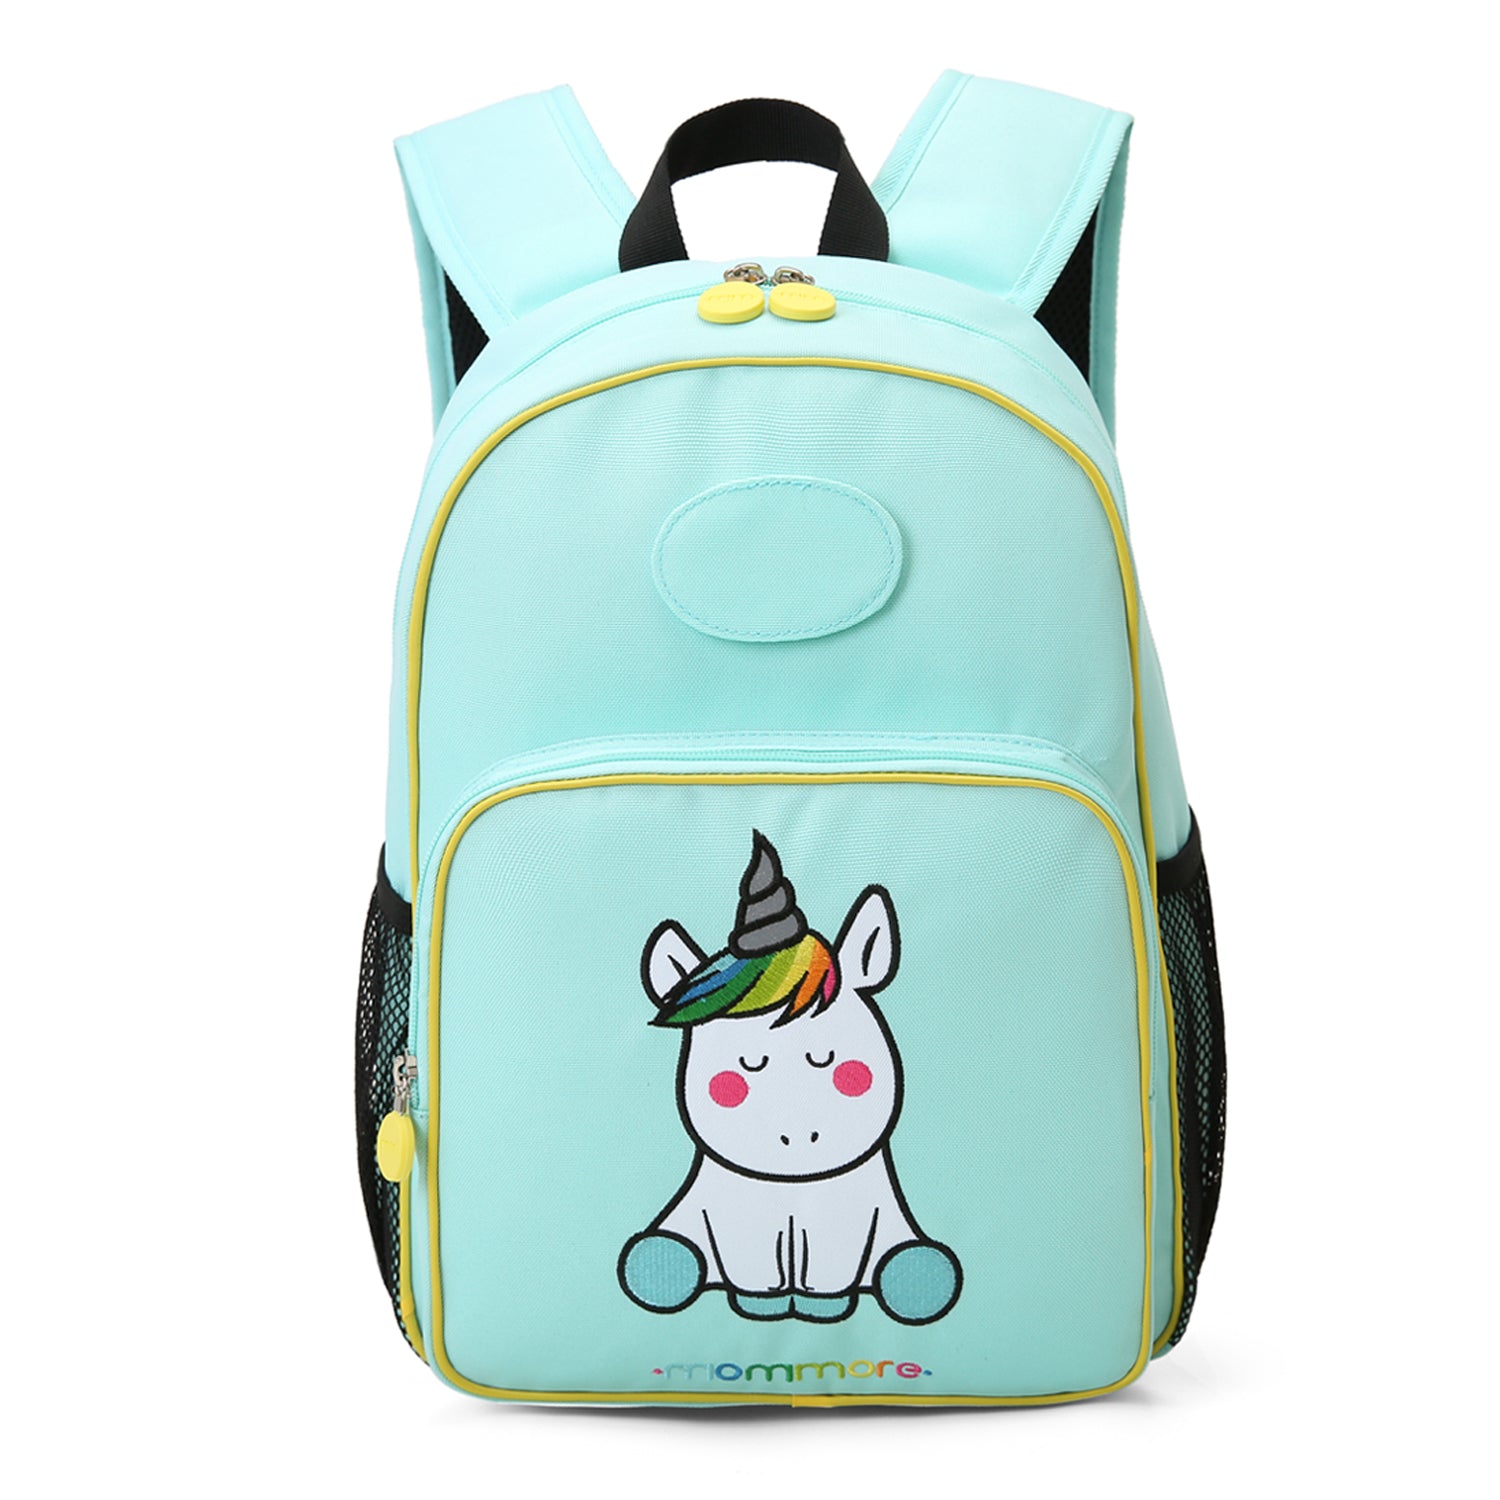 Little Unicorn Kids Backpack for 3-7 Years Old Boys/Girls